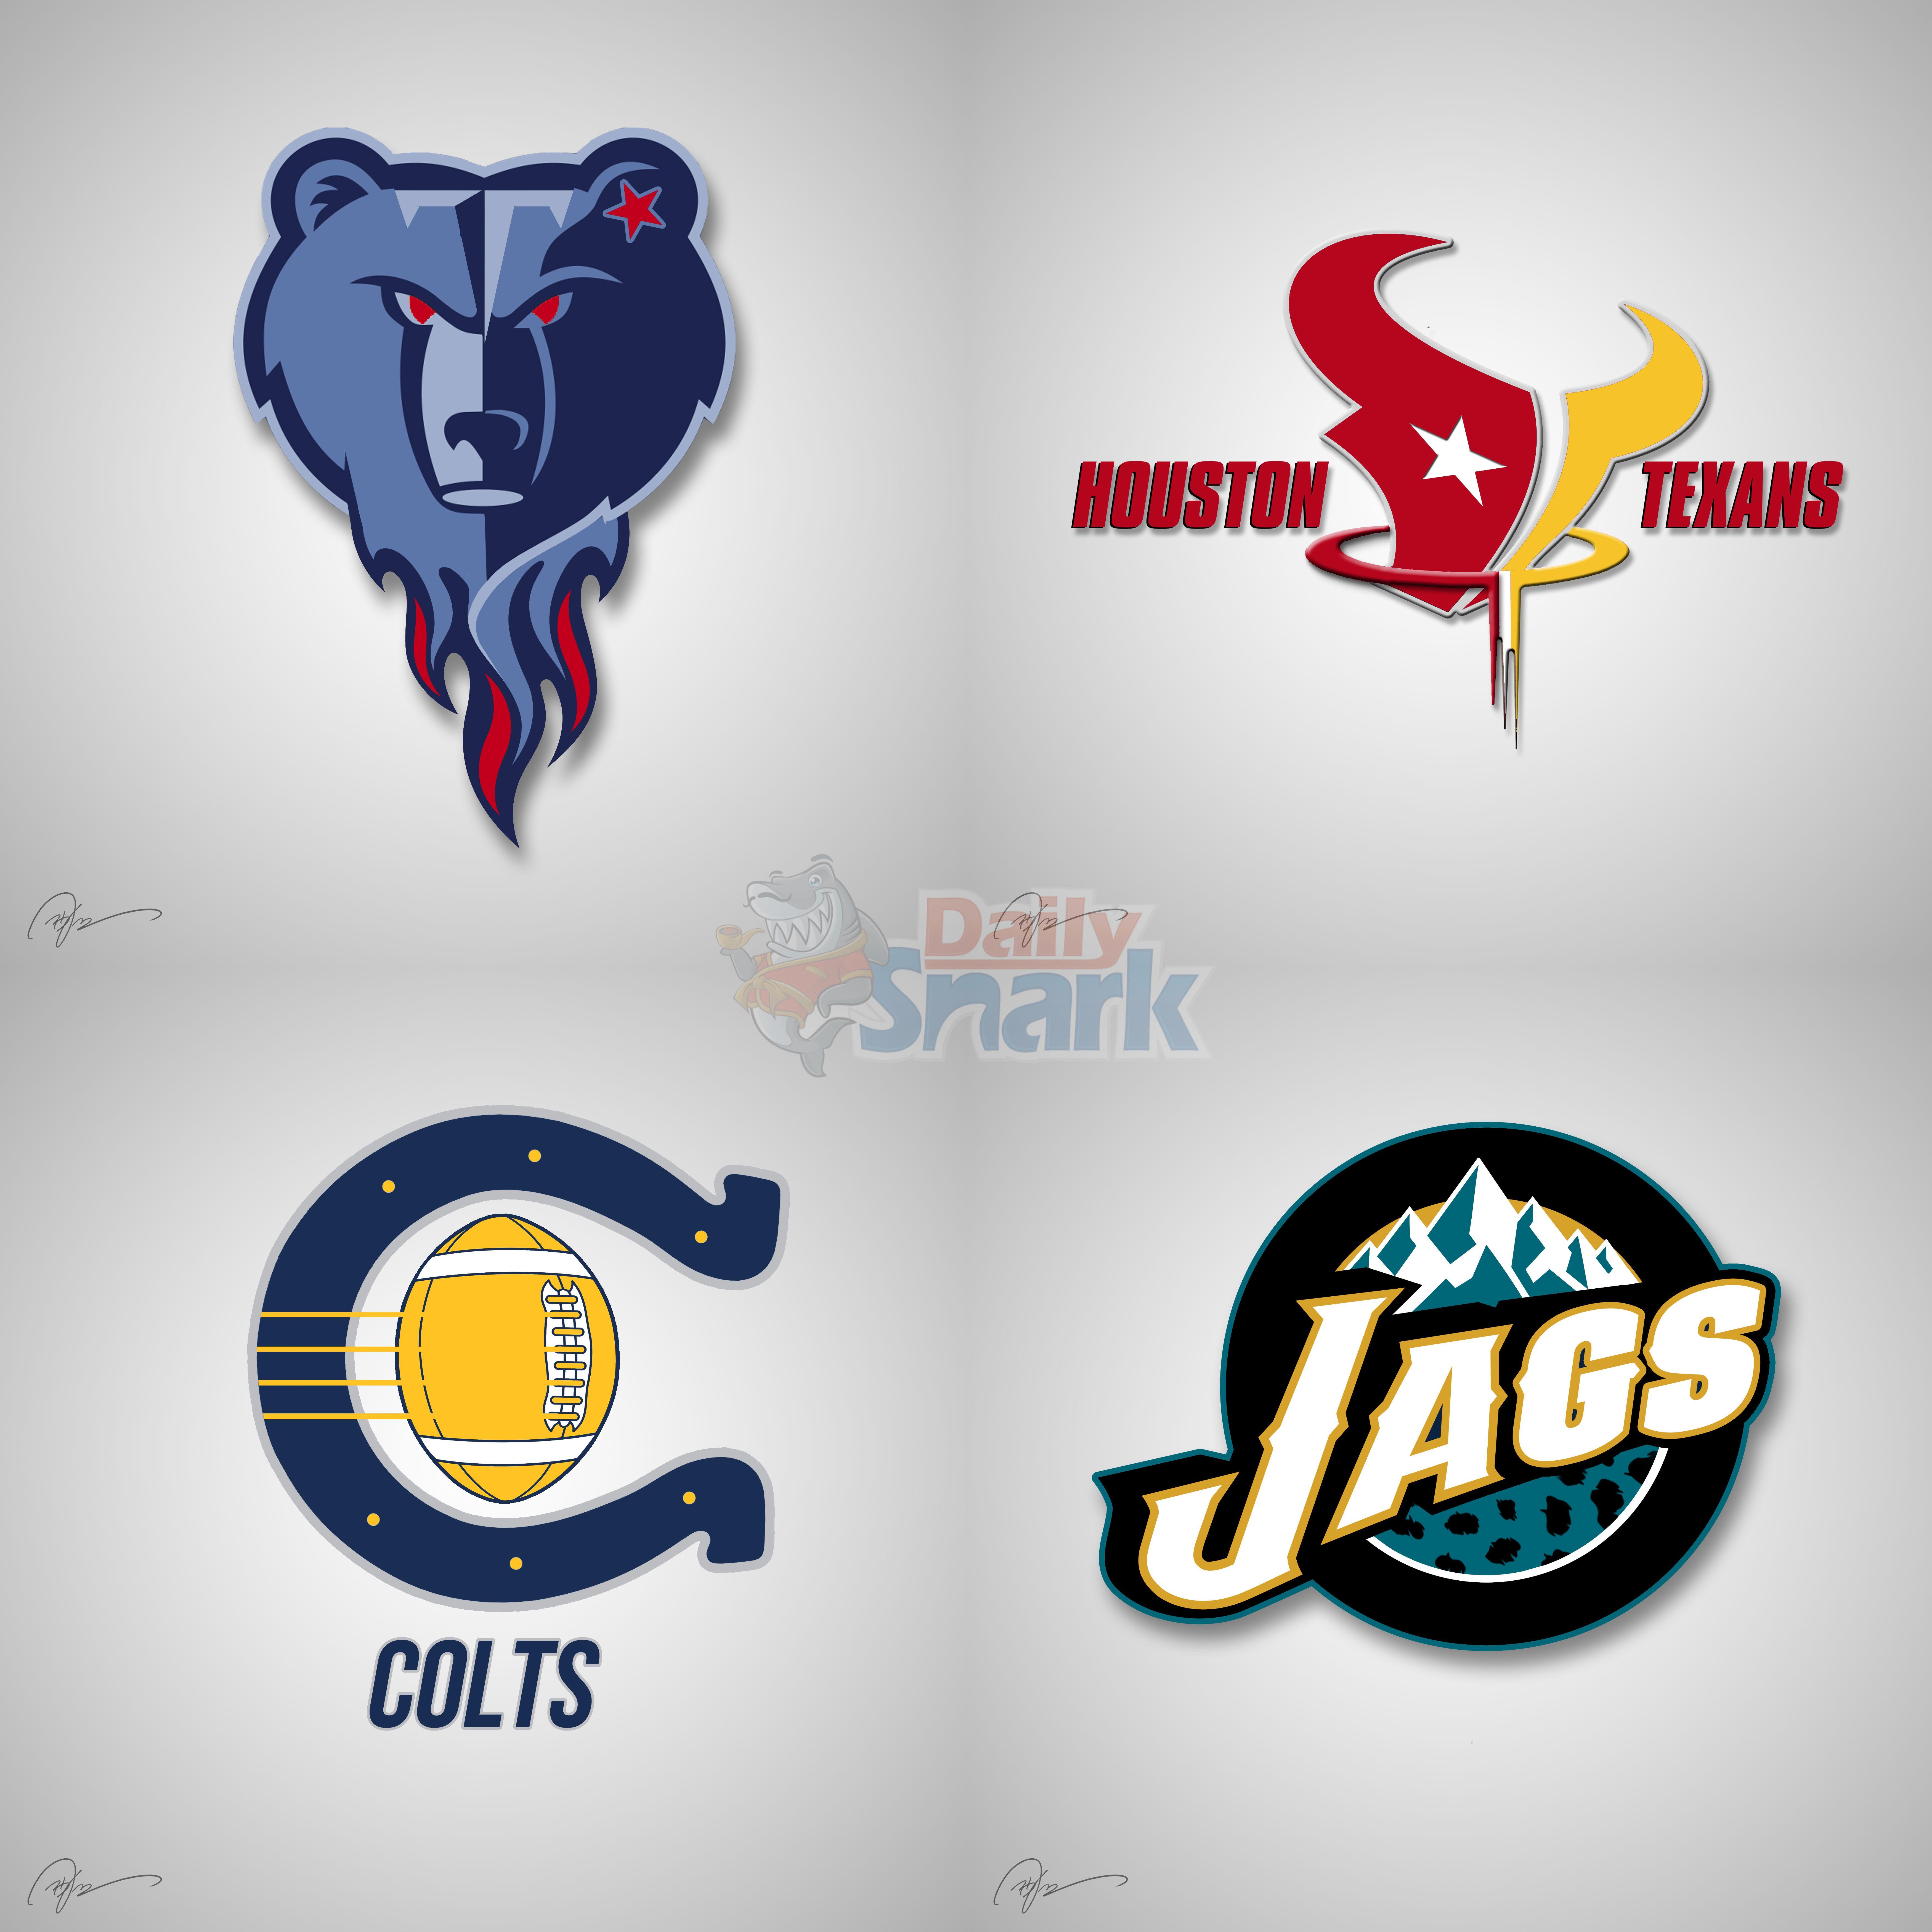 Cool NBA Logo - Ranking The Top 5 NFL/NBA Merged Logos | The Clem Report